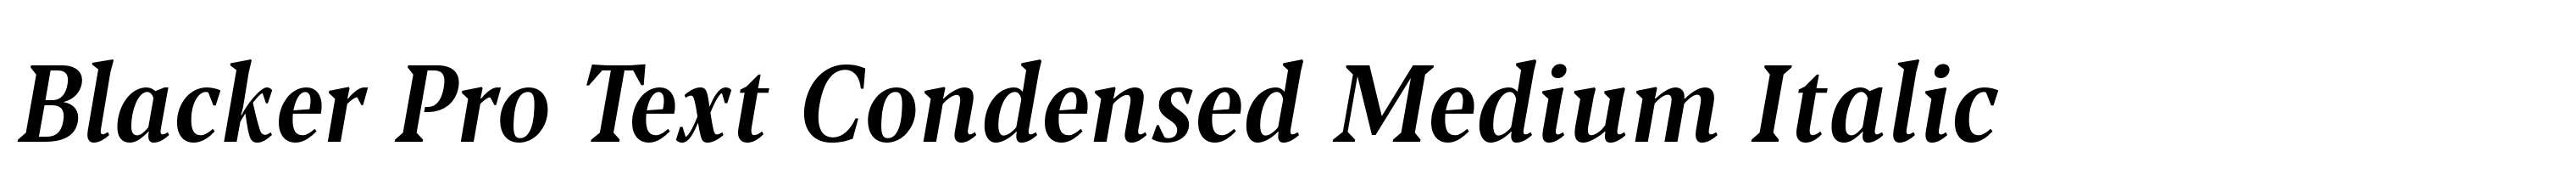 Blacker Pro Text Condensed Medium Italic